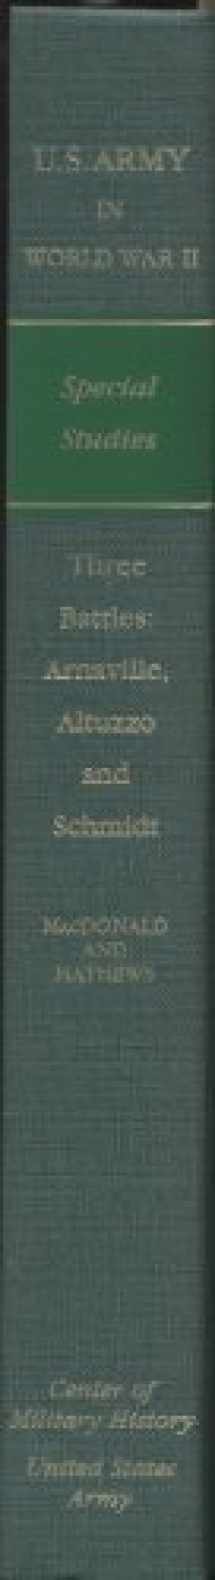 9780160239328-016023932X-Three Battles: Arnaville, Altuzzo, and Schmidt (United States Army in World War II)